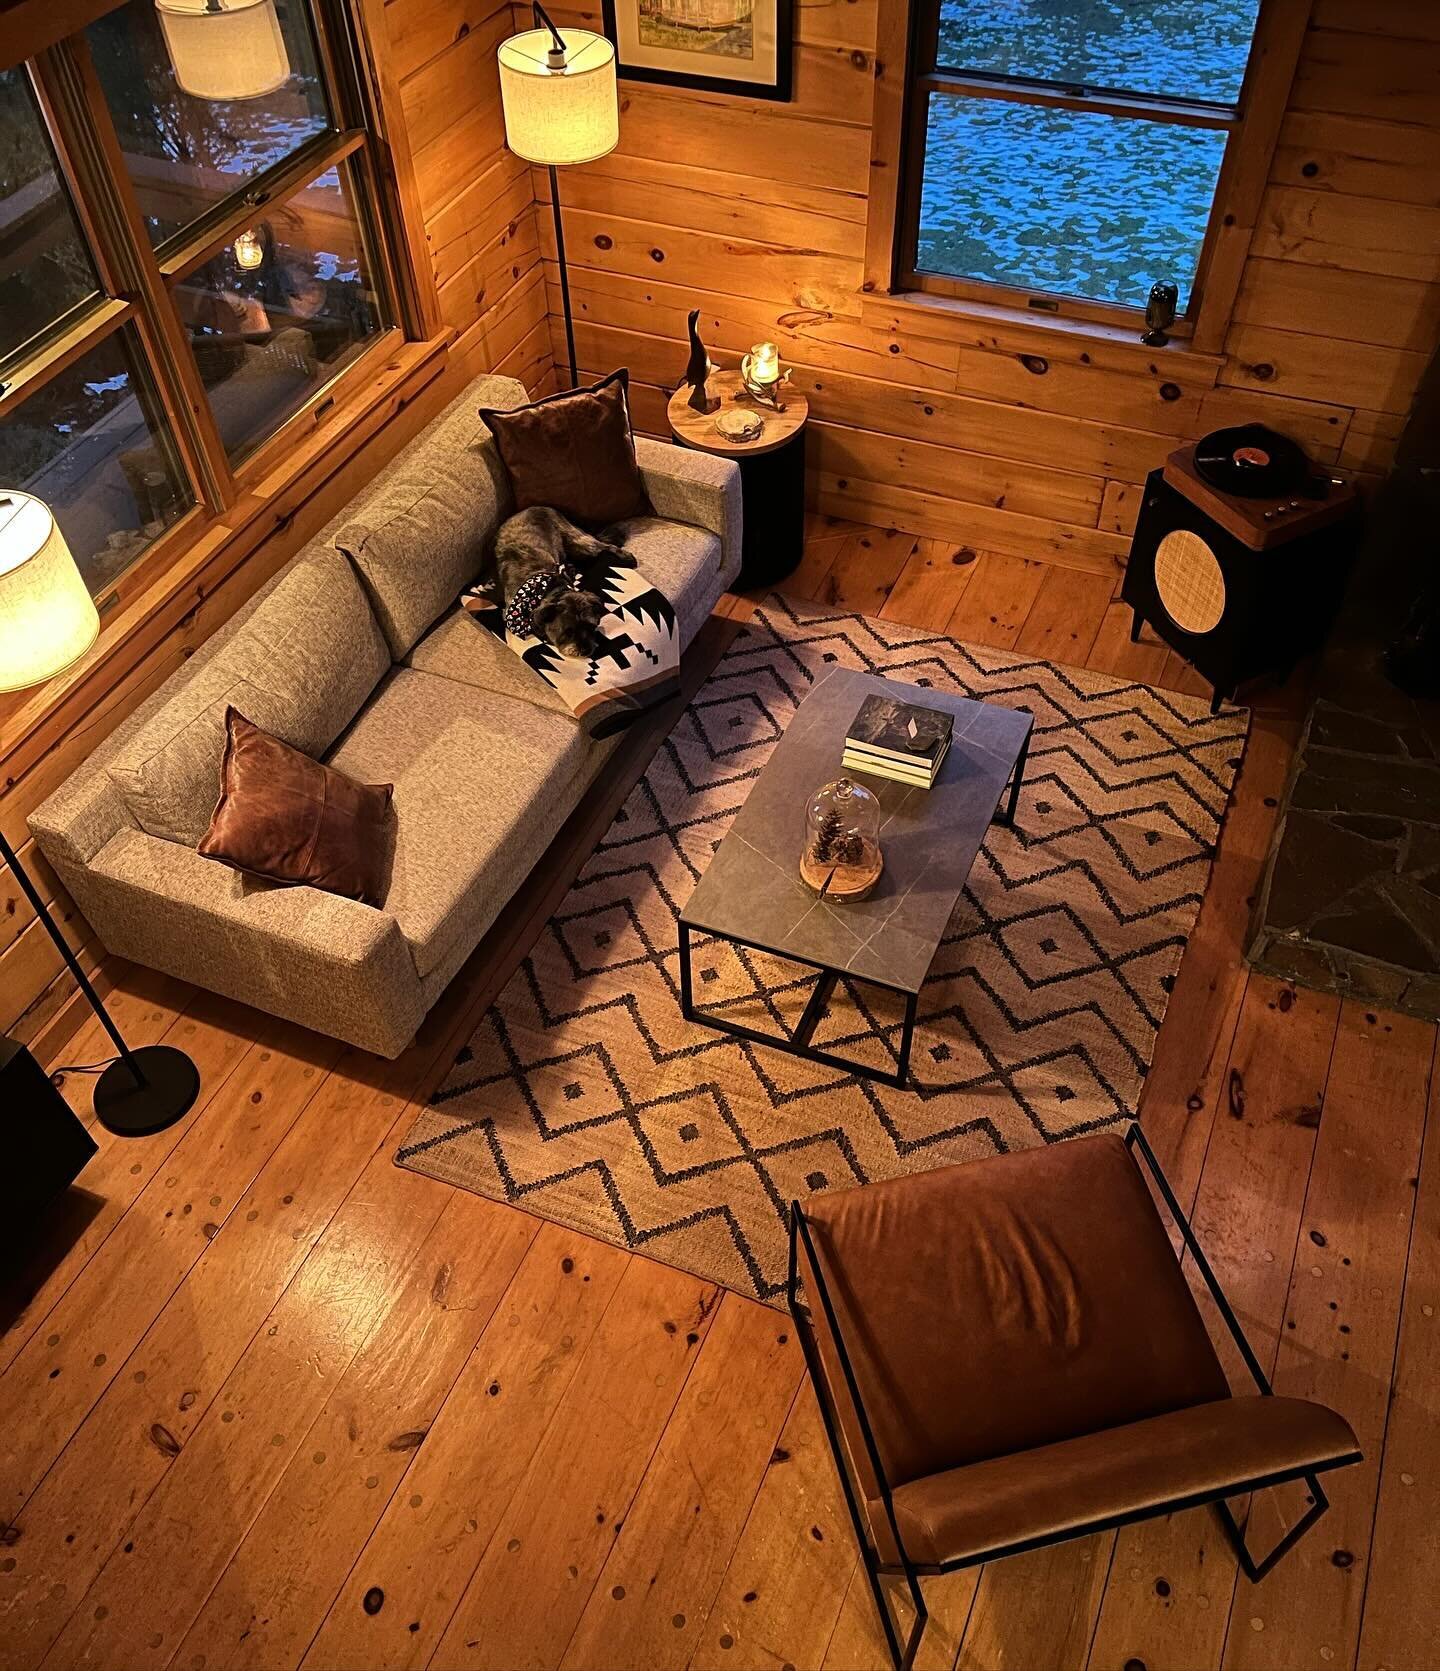 Living room glow up! #cabin #cabinlife #homedecor